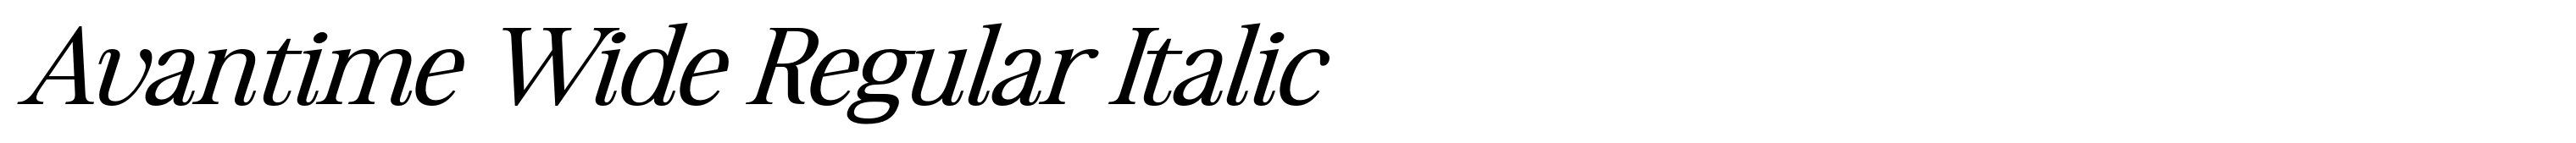 Avantime Wide Regular Italic